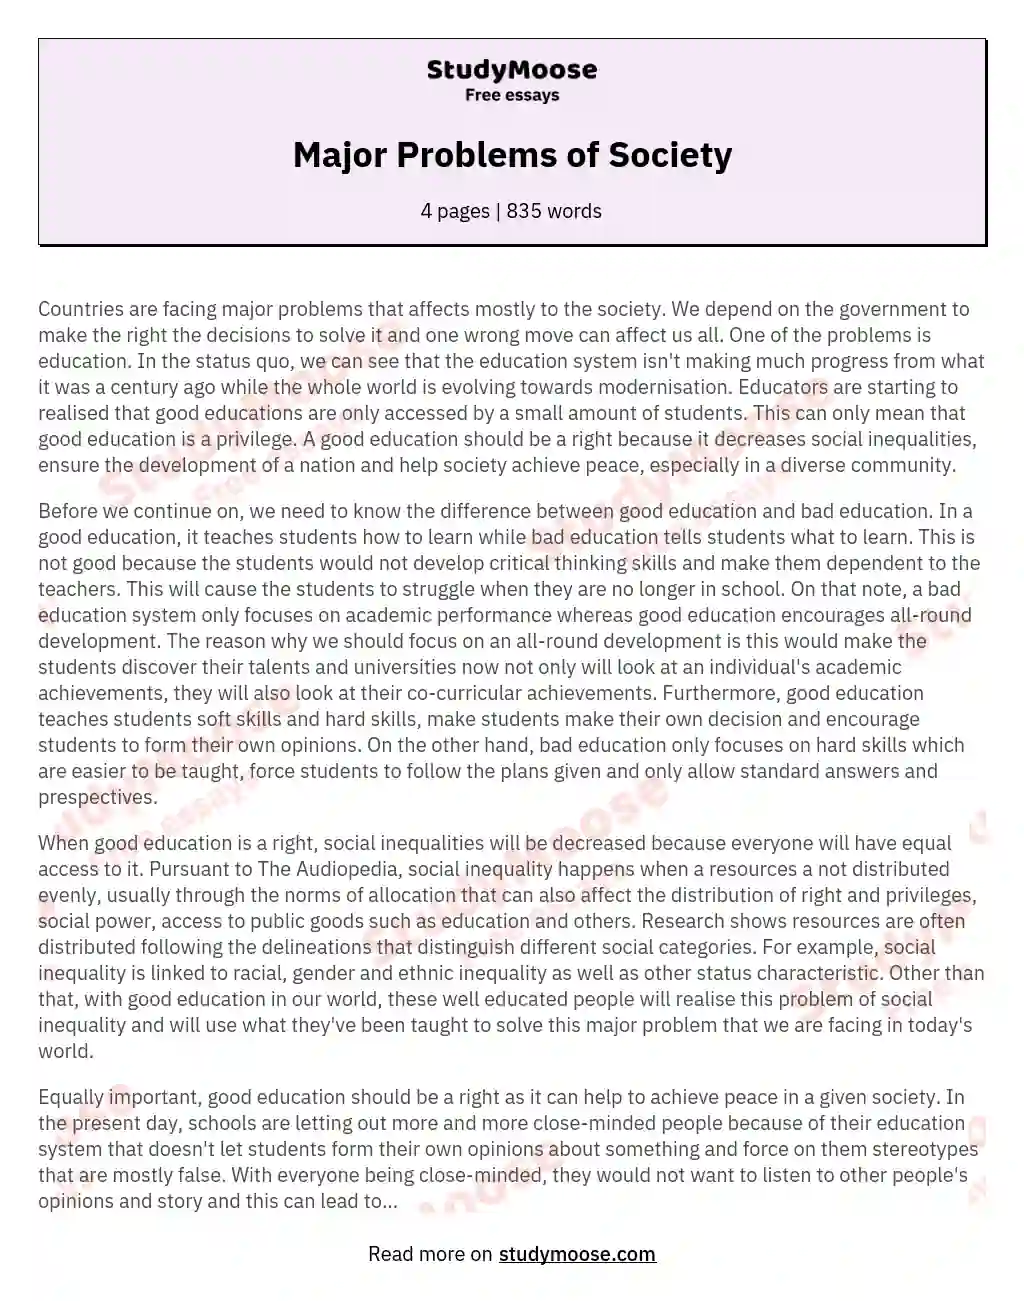 Major Problems of Society essay